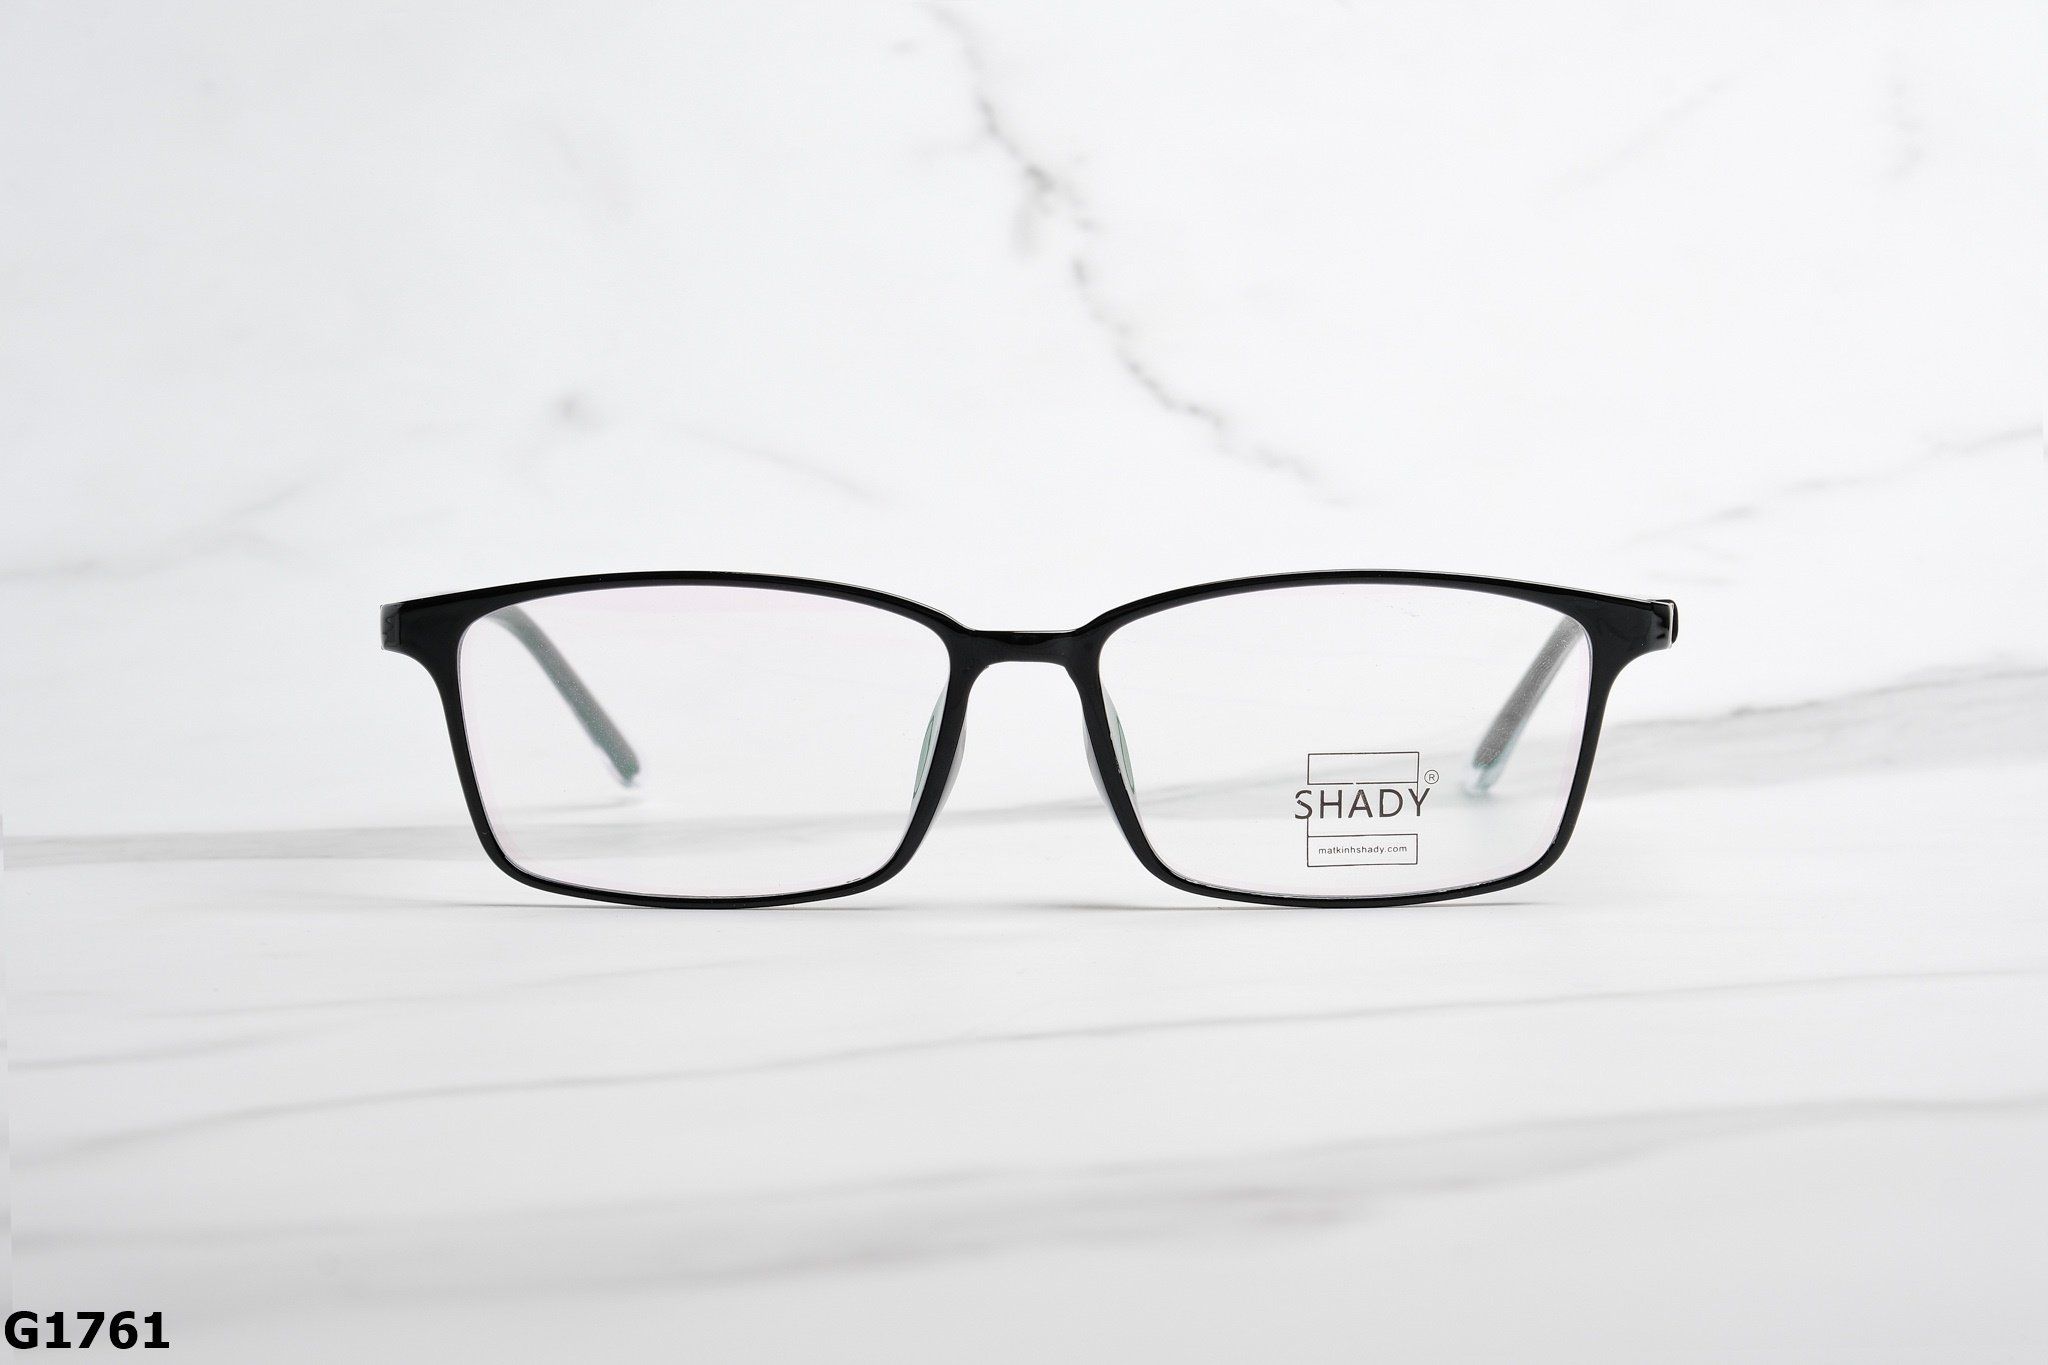  SHADY Eyewear - Glasses - G1761 